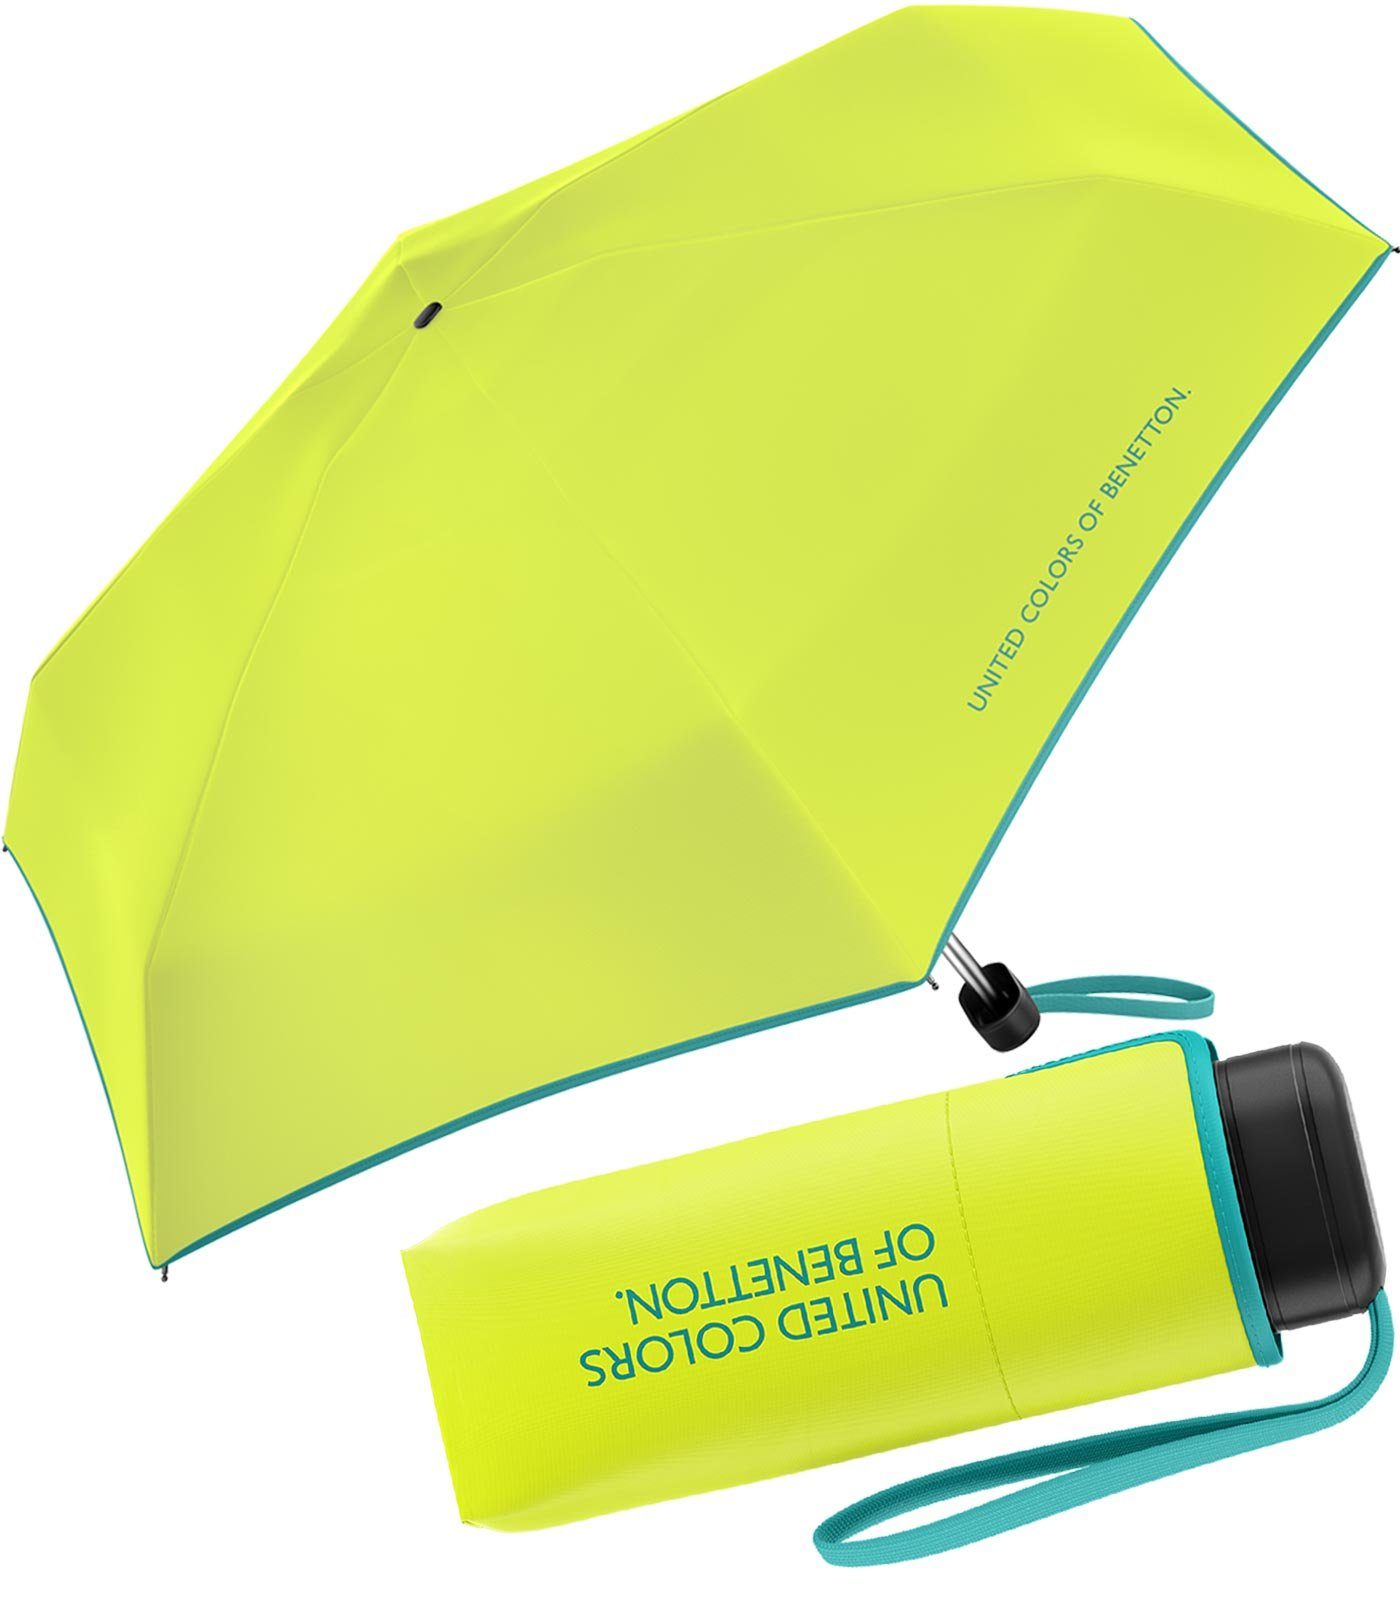 United Colors Flat Taschenregenschirm mit Saum Modefarben punch, 2022 Benetton - HW kontrastreichem leuchtende of Mini Ultra lime limette-petrol